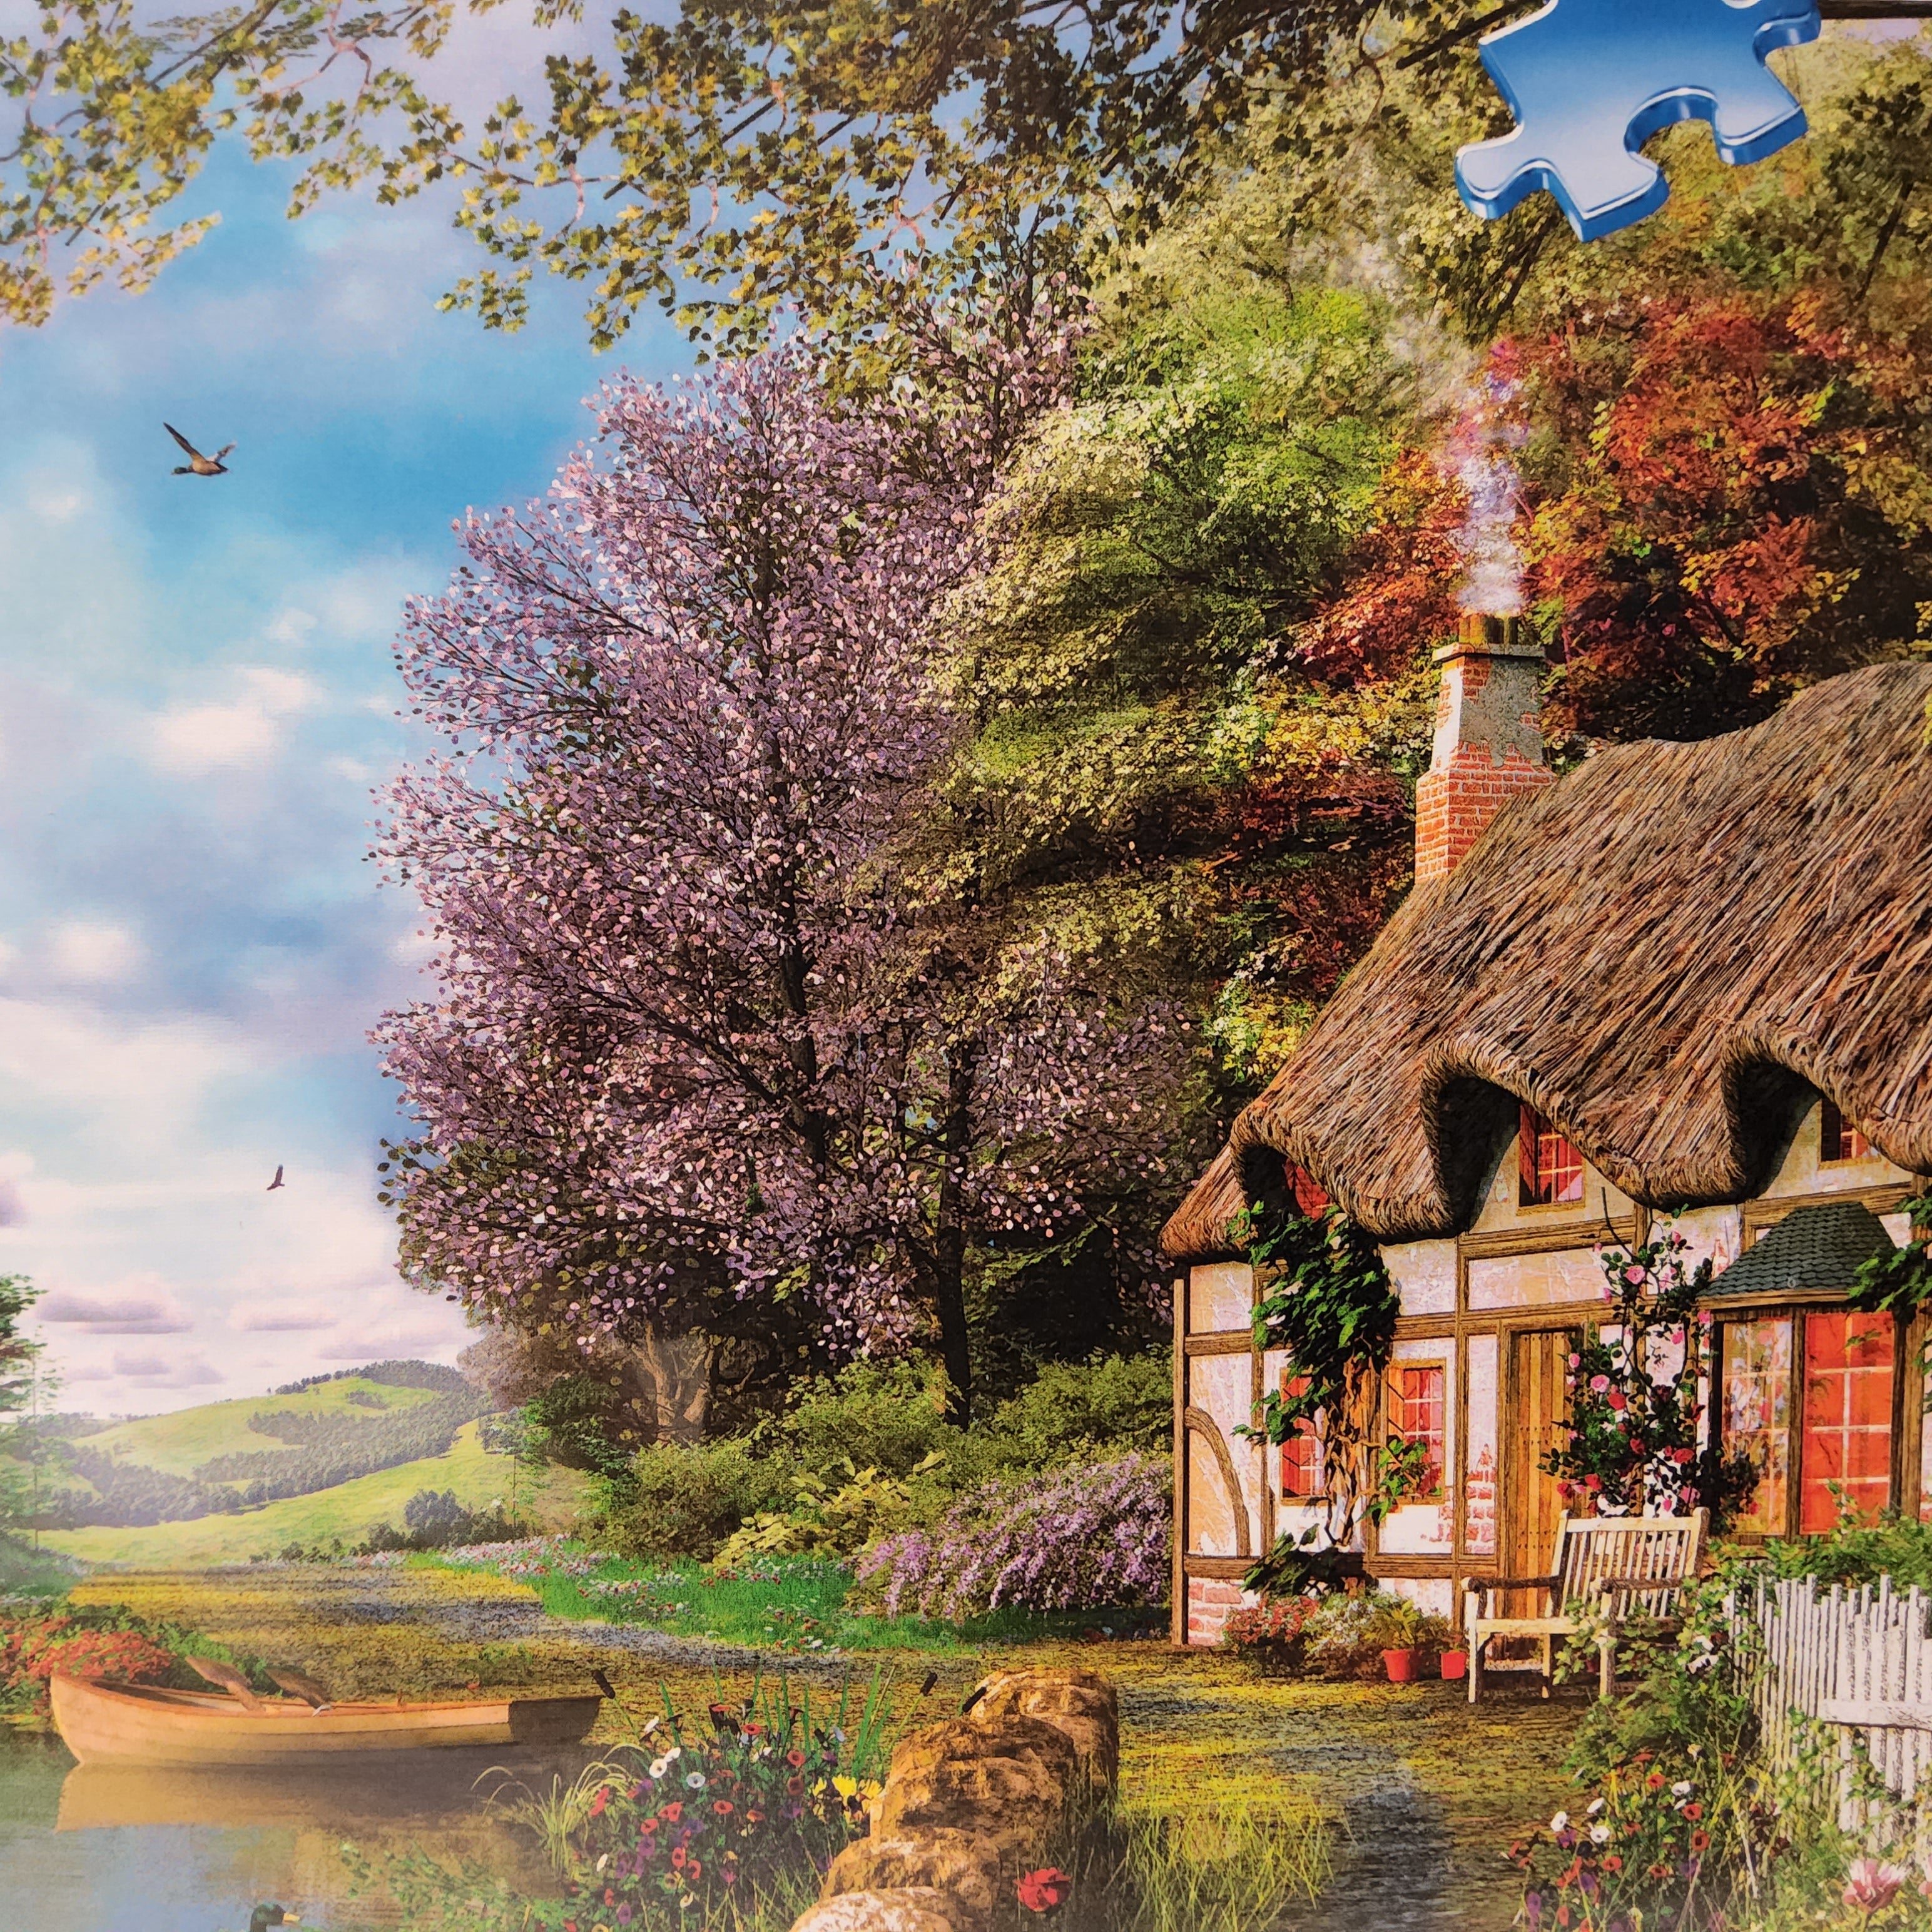 Ravensburger Puzzle - Country Cottage - 1500 pieces - #16202